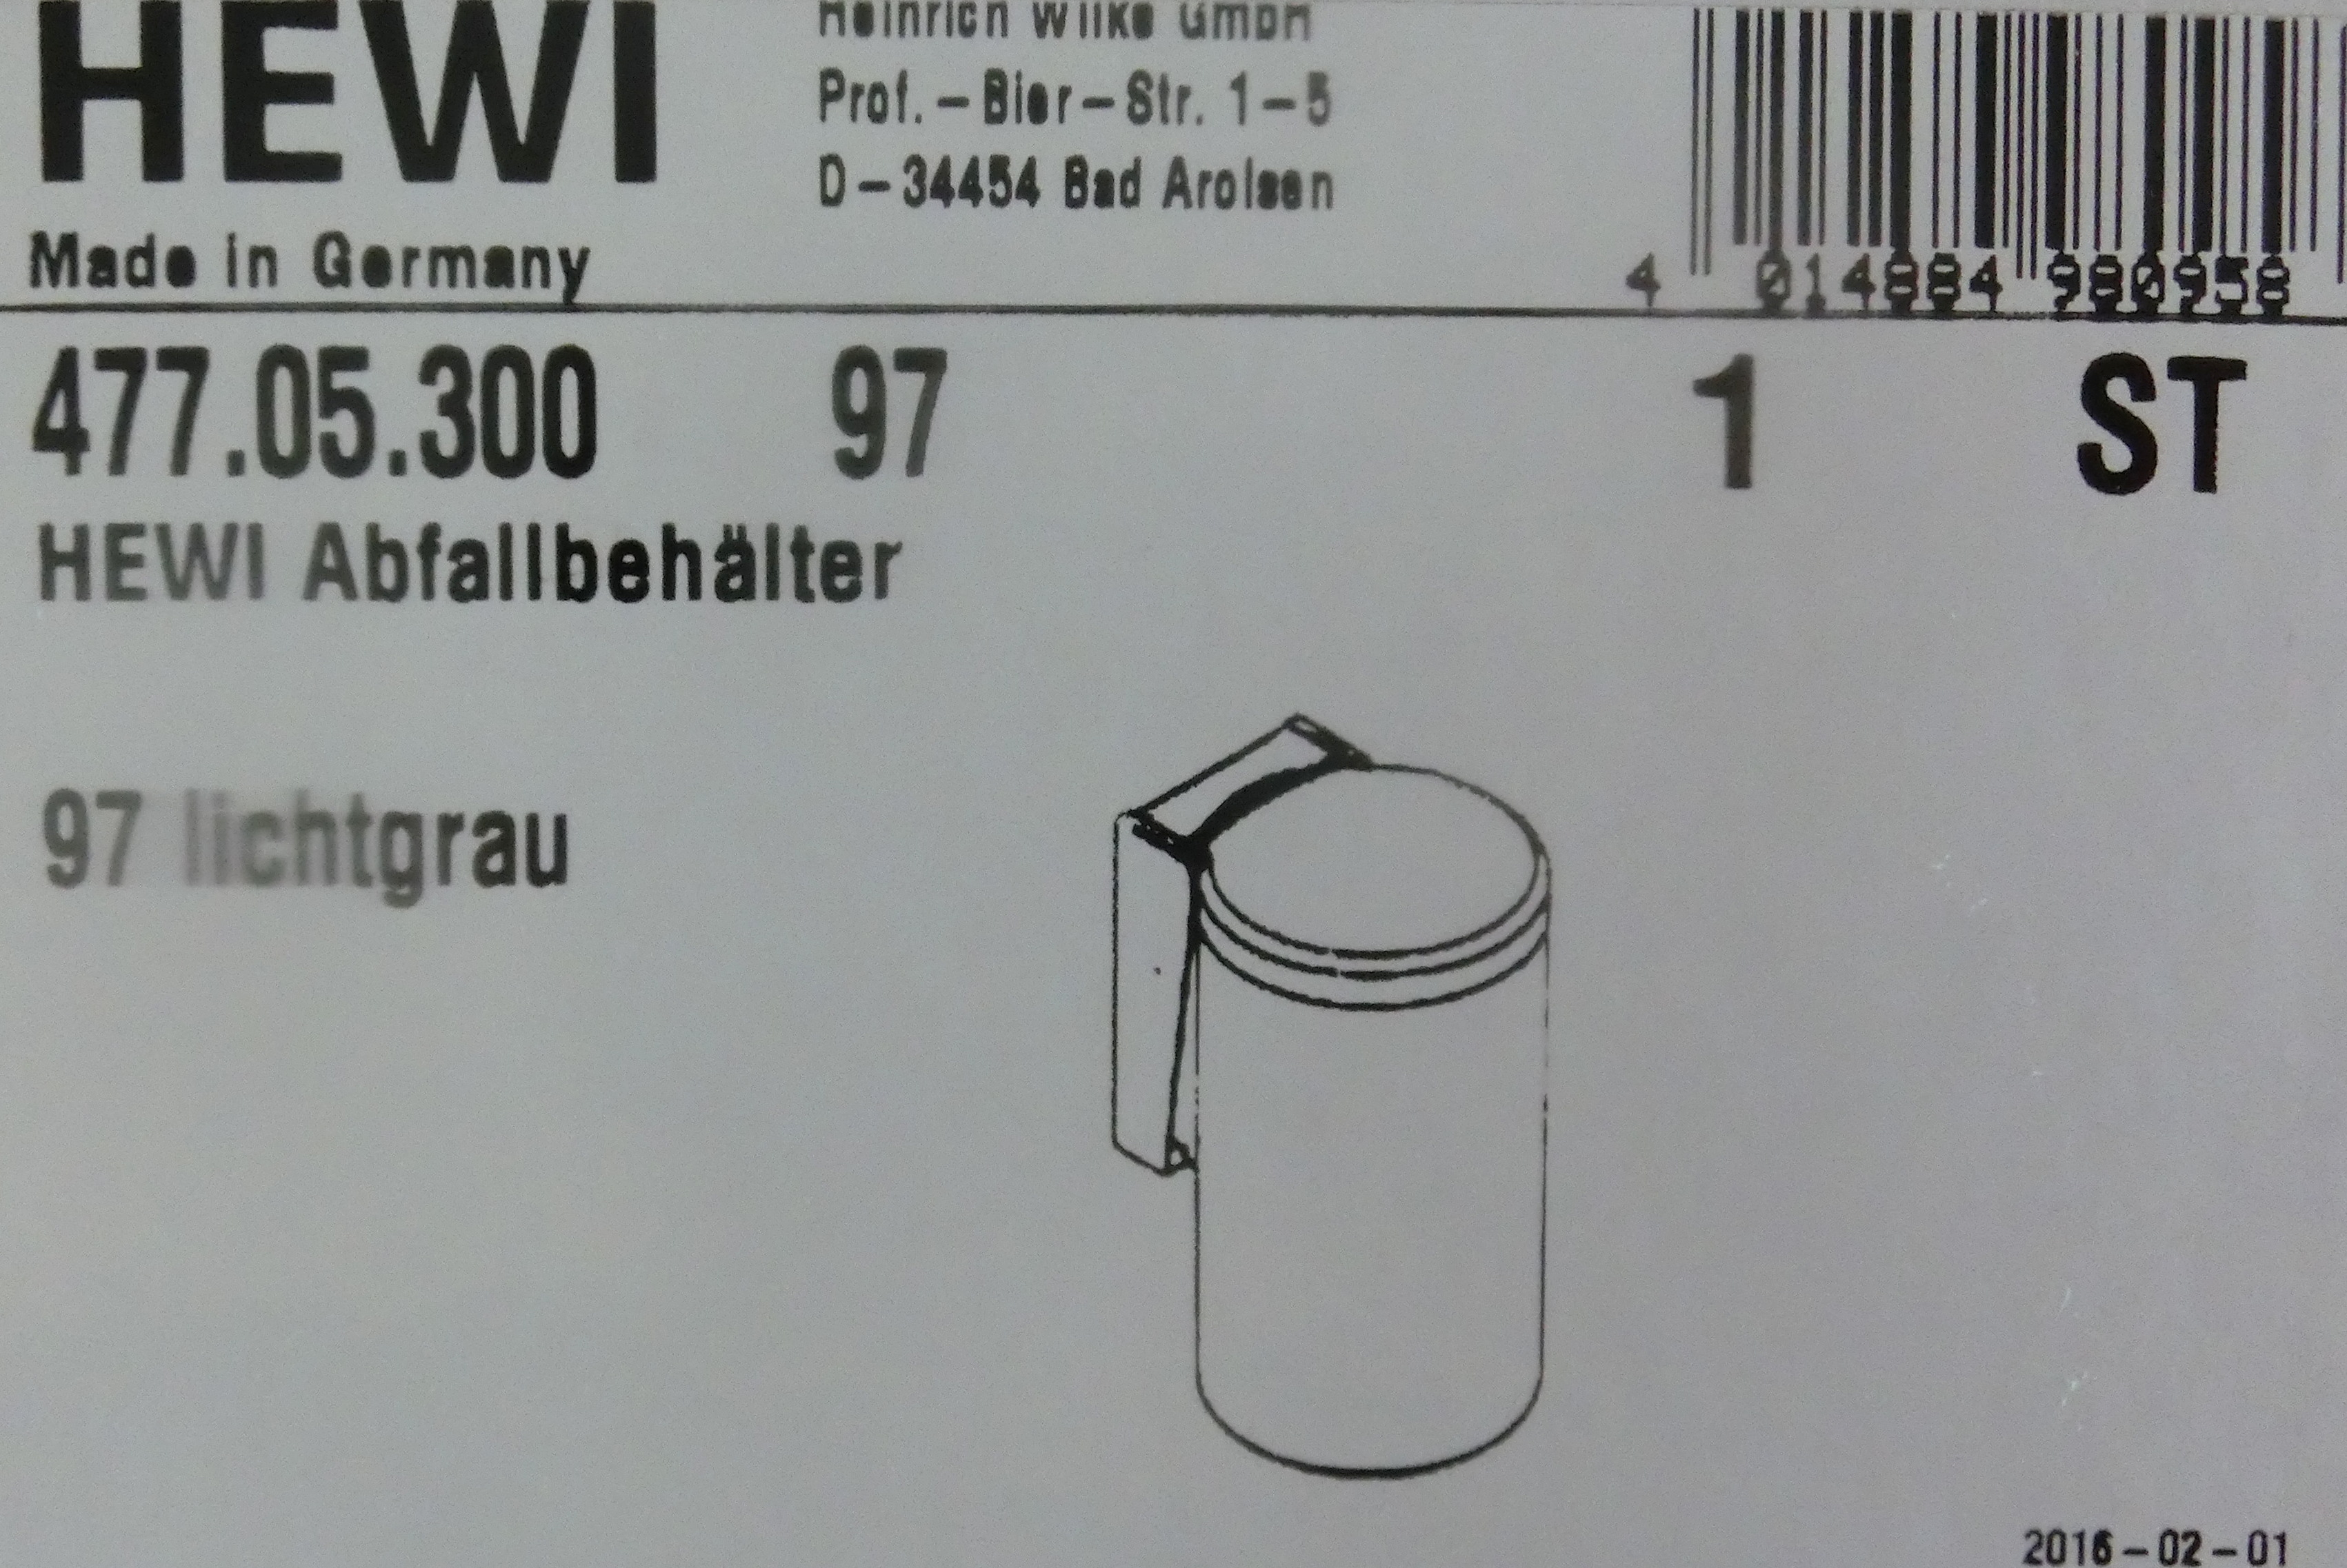 Hewi Serie 477 Abfallbehälter aquablau; 477.05.300-55 